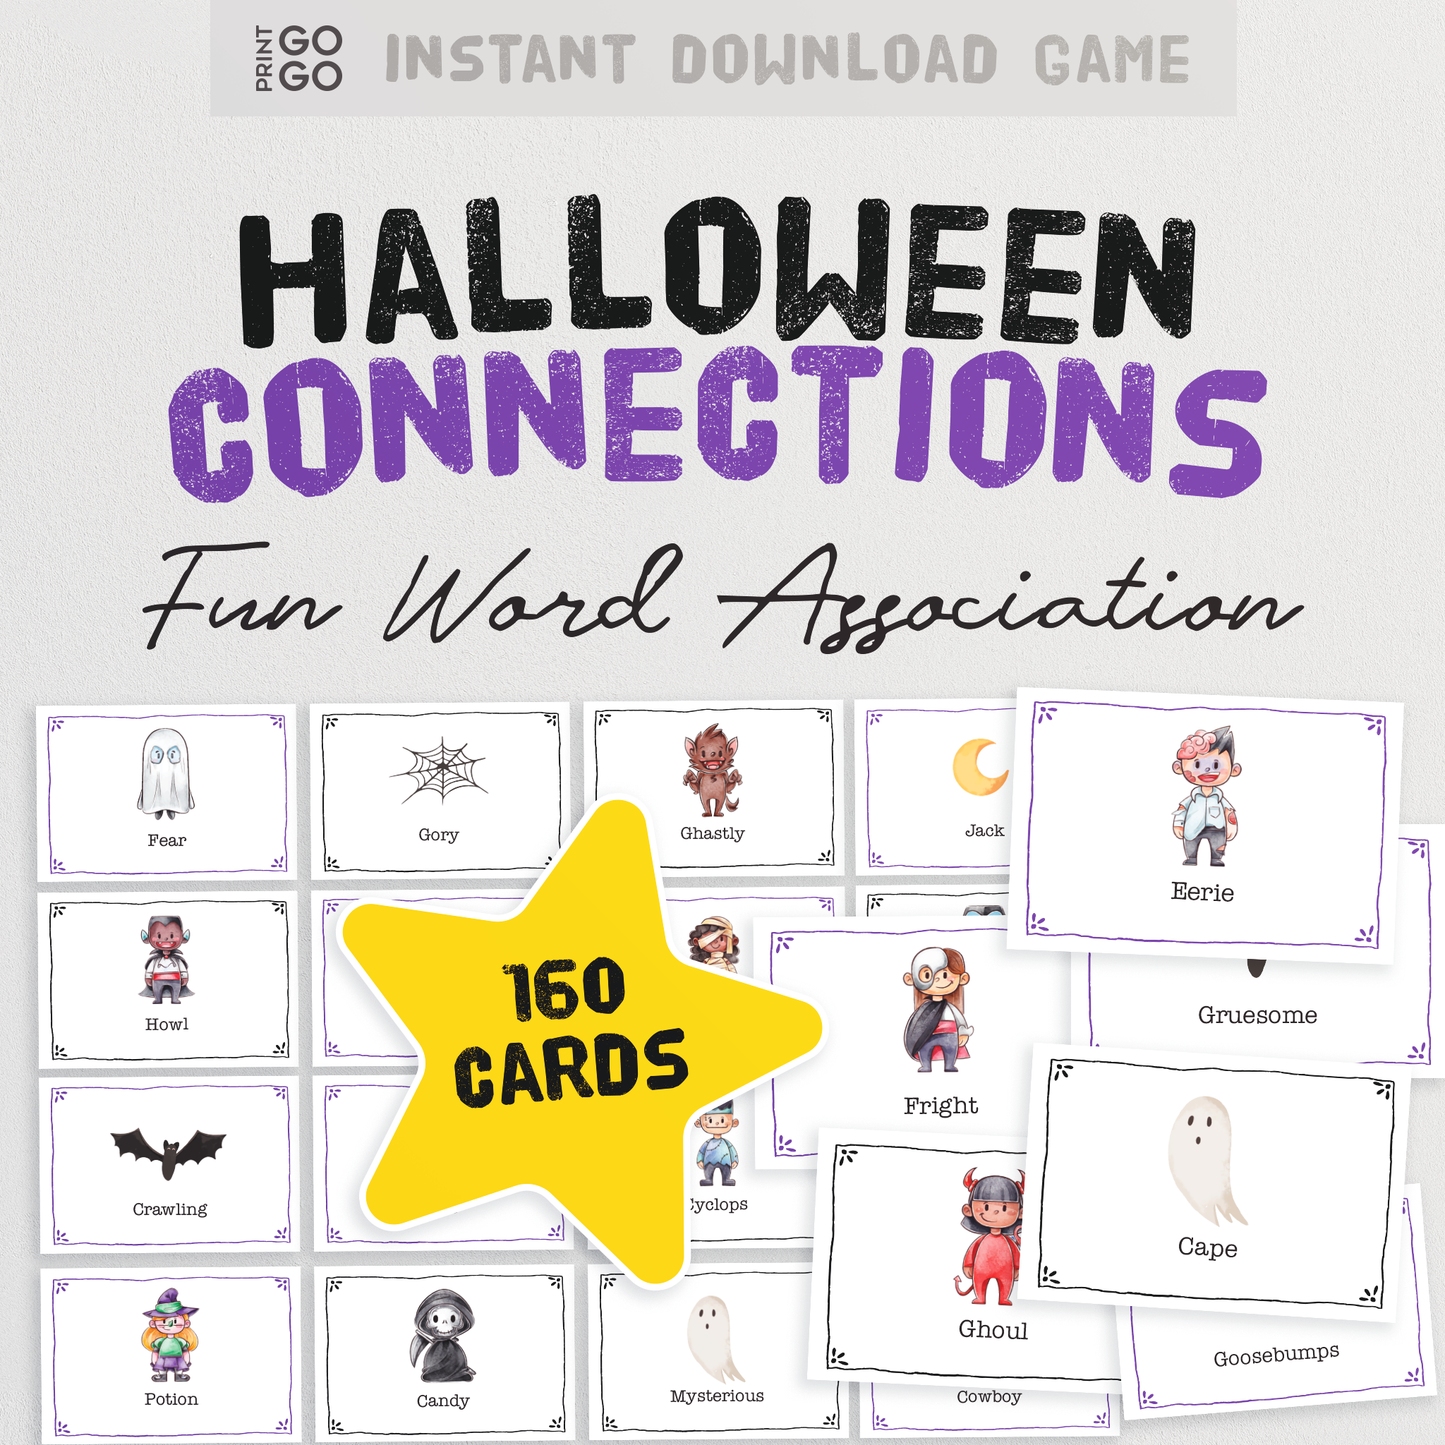 Halloween Connections Game | Halloween Word Association | Halloween Word Game